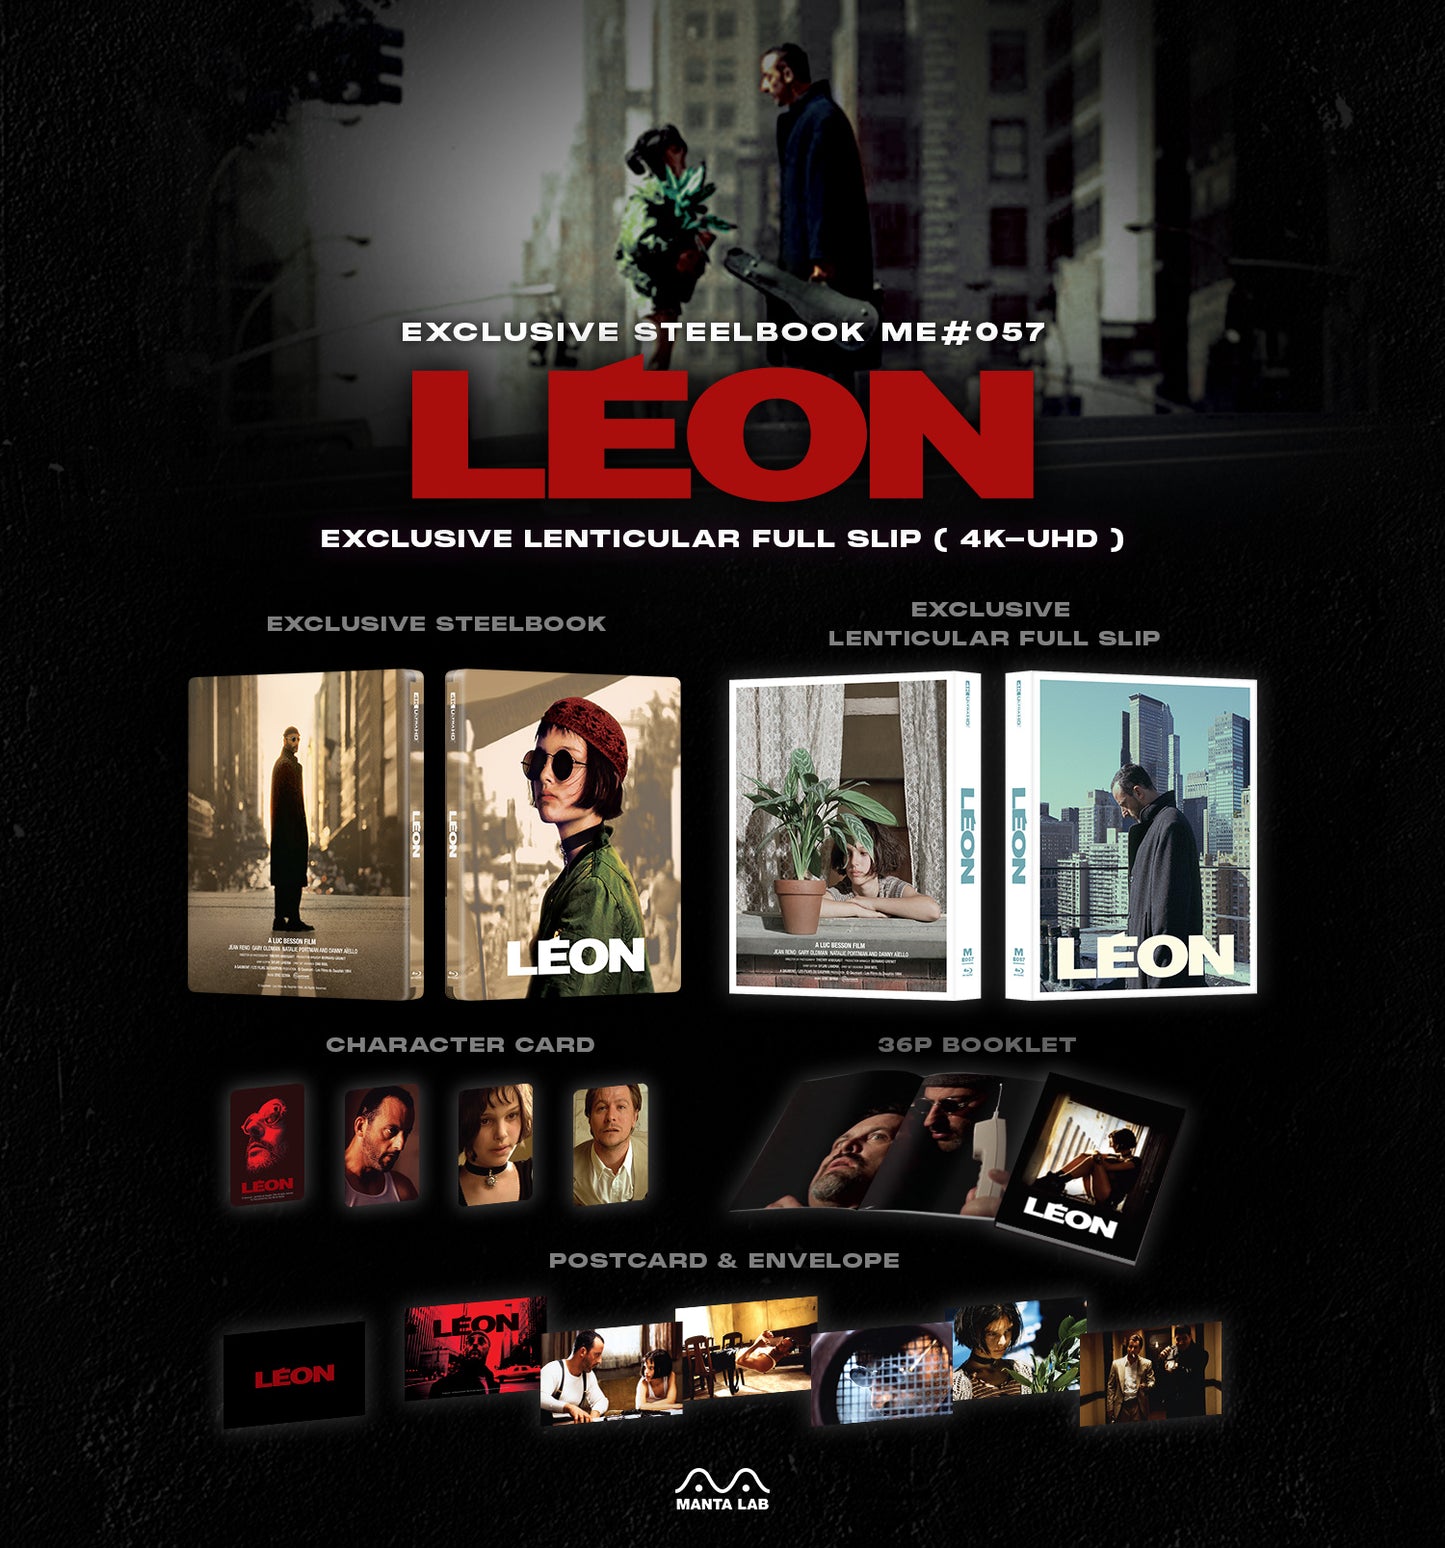 Leon 4K Blu-ray Steelbook Manta Lab Exclusive ME#57 HDN GB Pre-Order Lenticular Full Slip